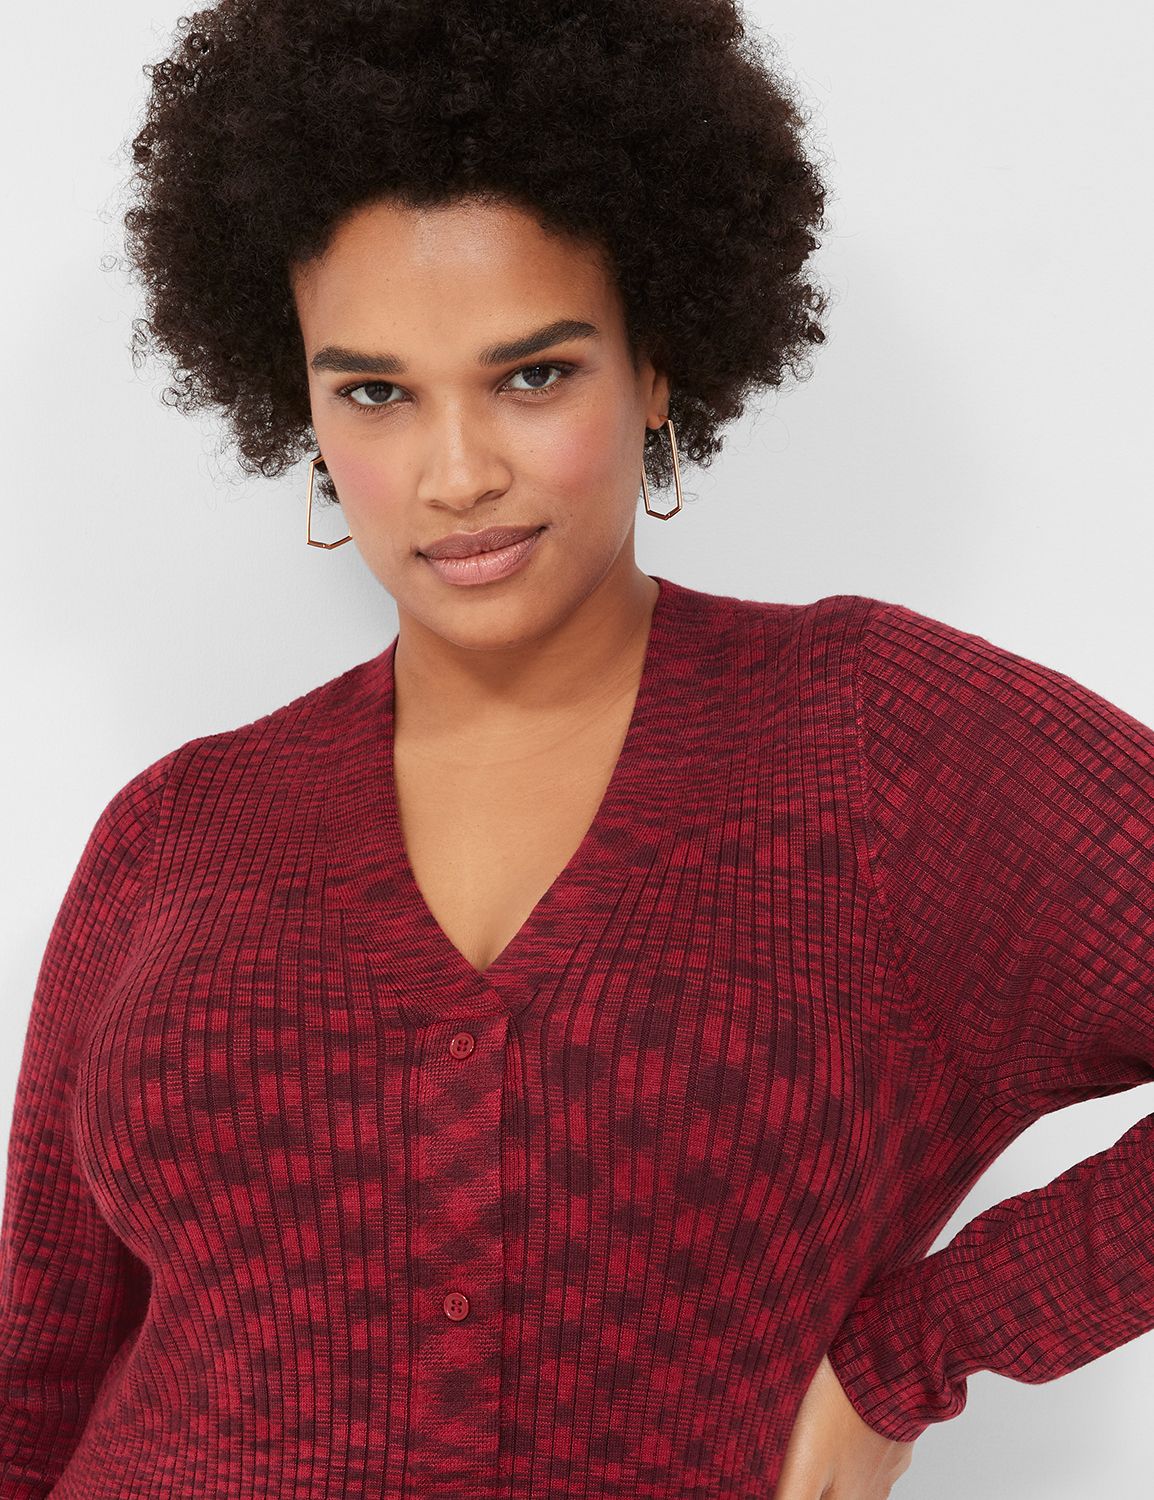 Olive Ribbed Sweater Dress – Lane 201